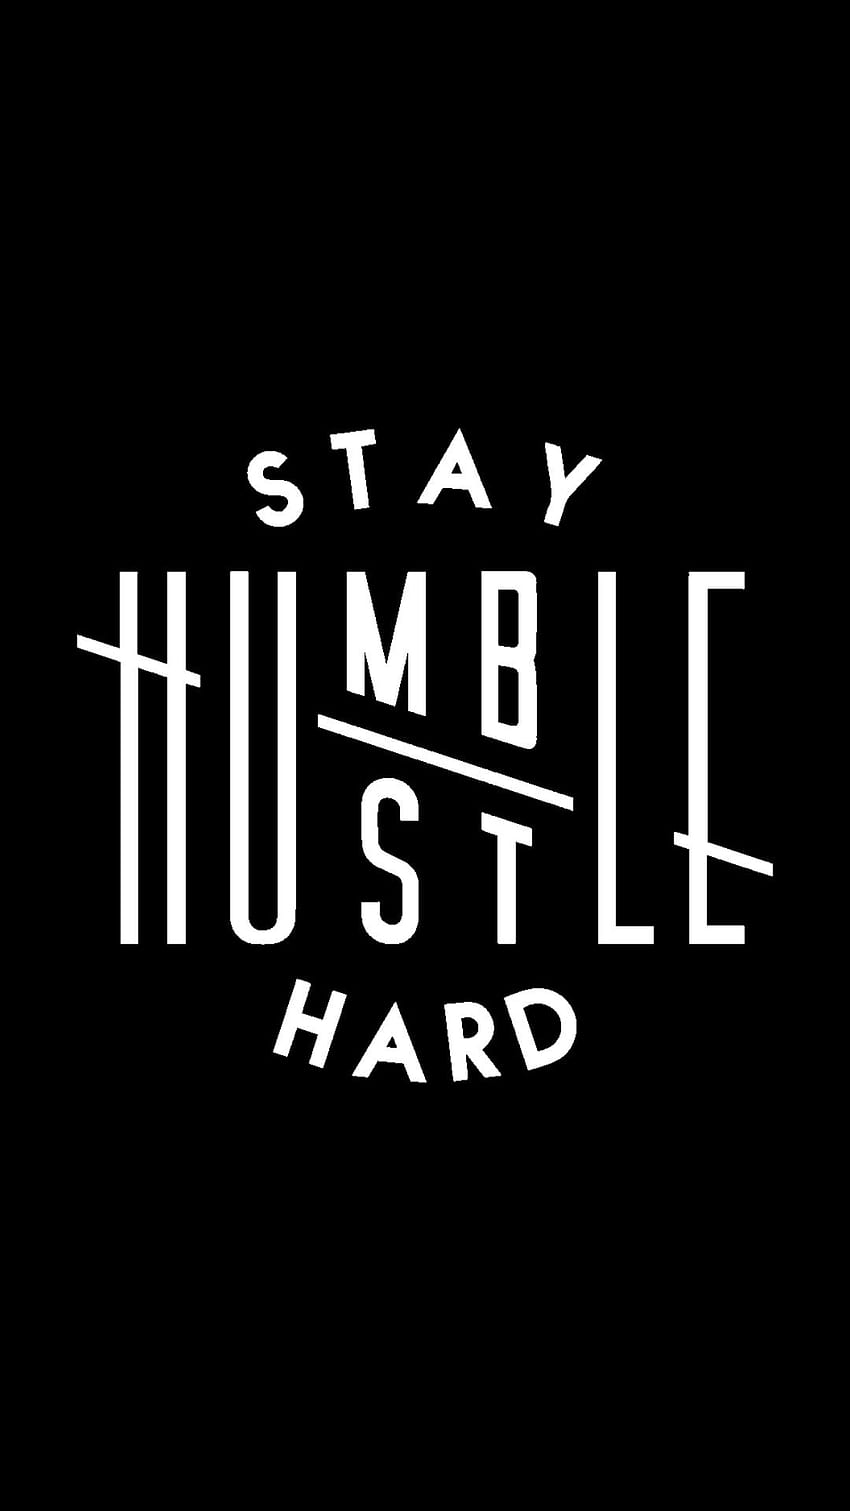 Tetap Humble Hustle Keras. Tetap rendah hati, cetakan kutipan lucu, Tetap rendah hati kutipan, American Hustle wallpaper ponsel HD